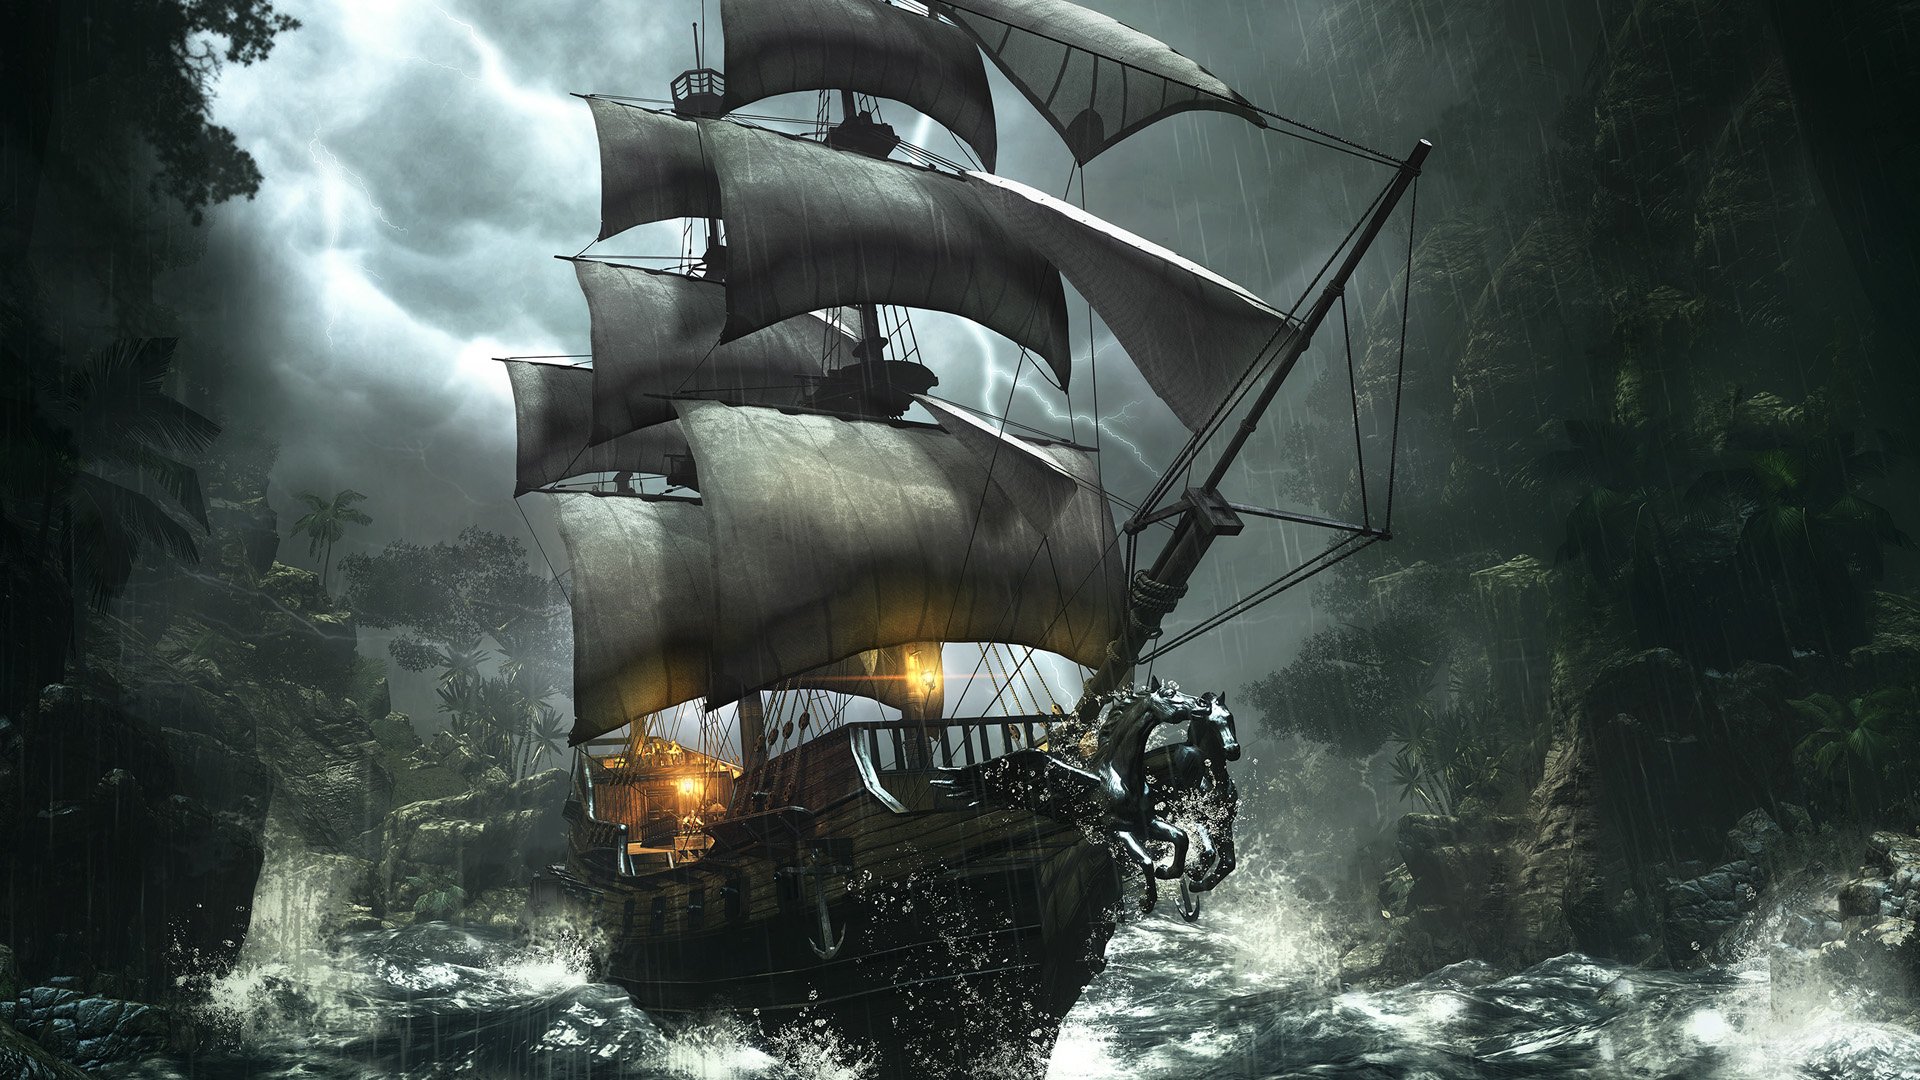  adventure rpg pirate ship wallpaper 1920x1080 493850 WallpaperUP